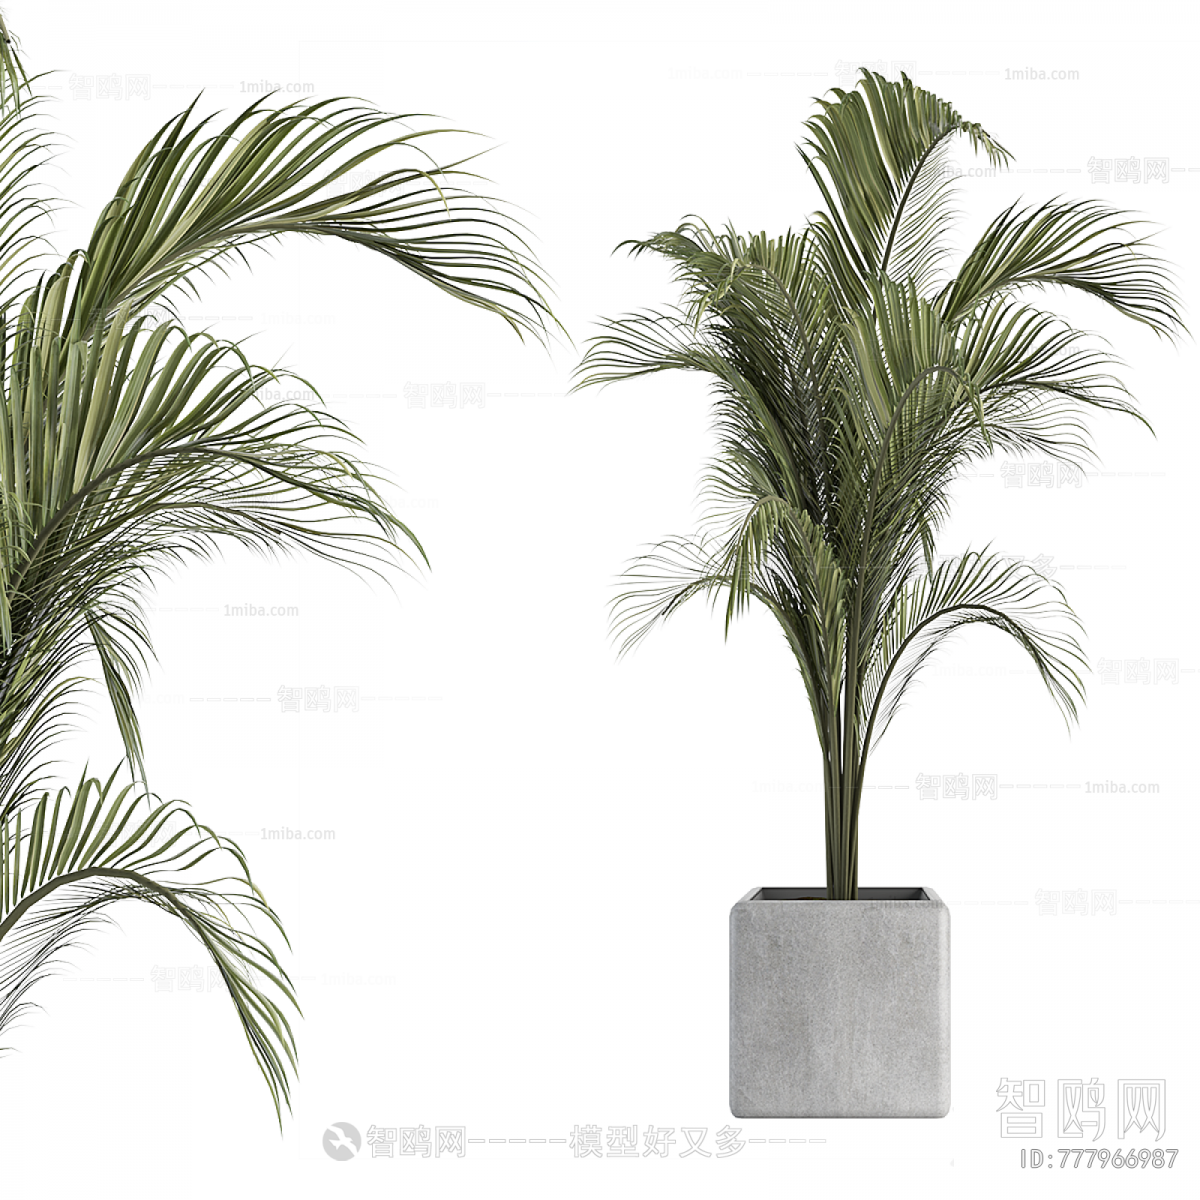 Wabi-sabi Style Ground Green Plant Potted Plants